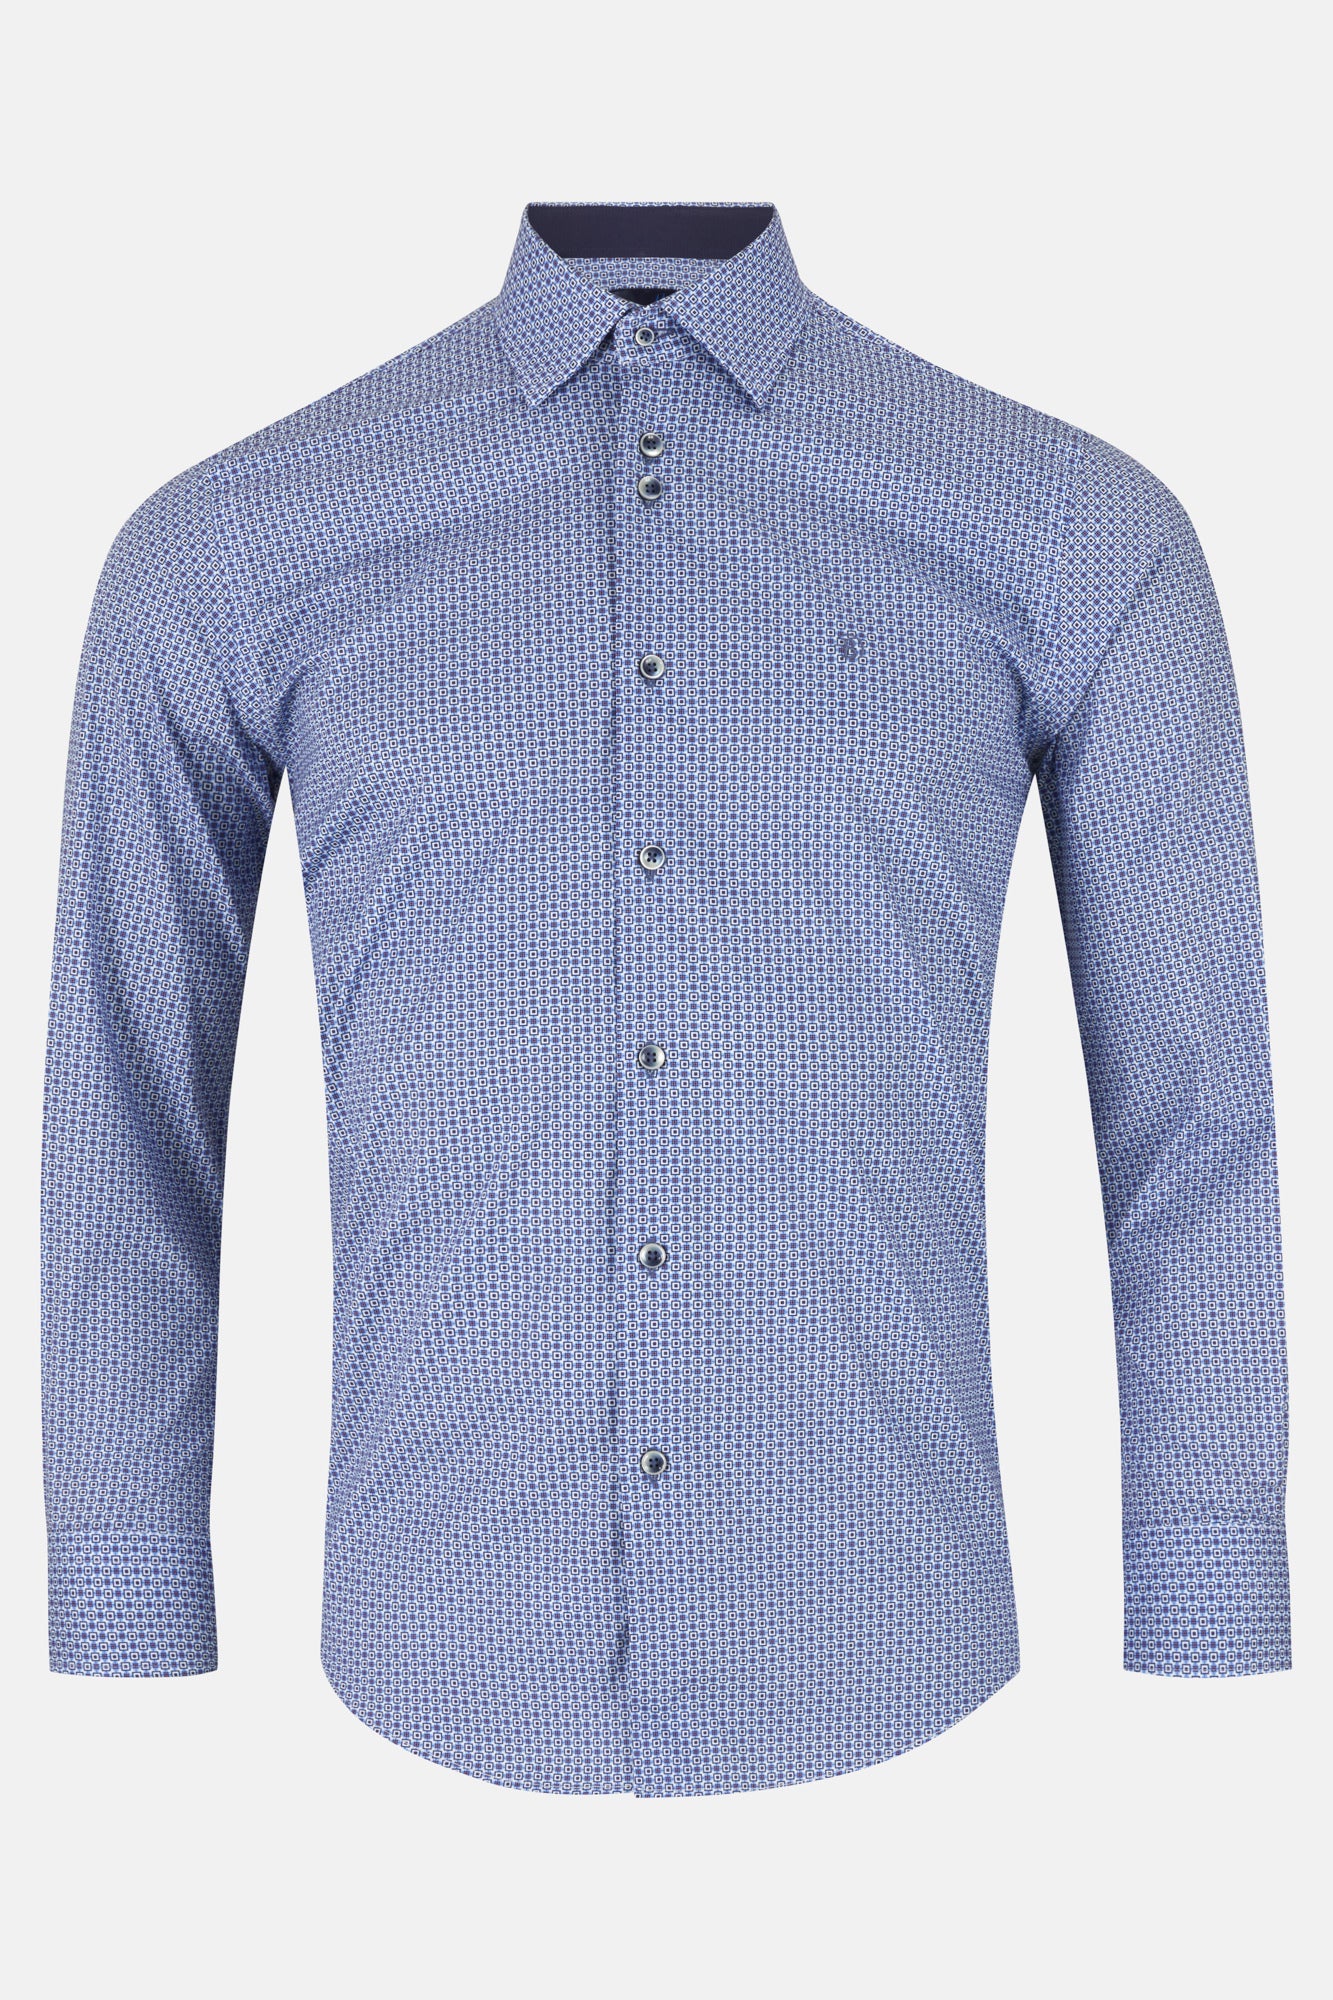 Nick Olive Long Sleeve Shirt By Benetti Menswear